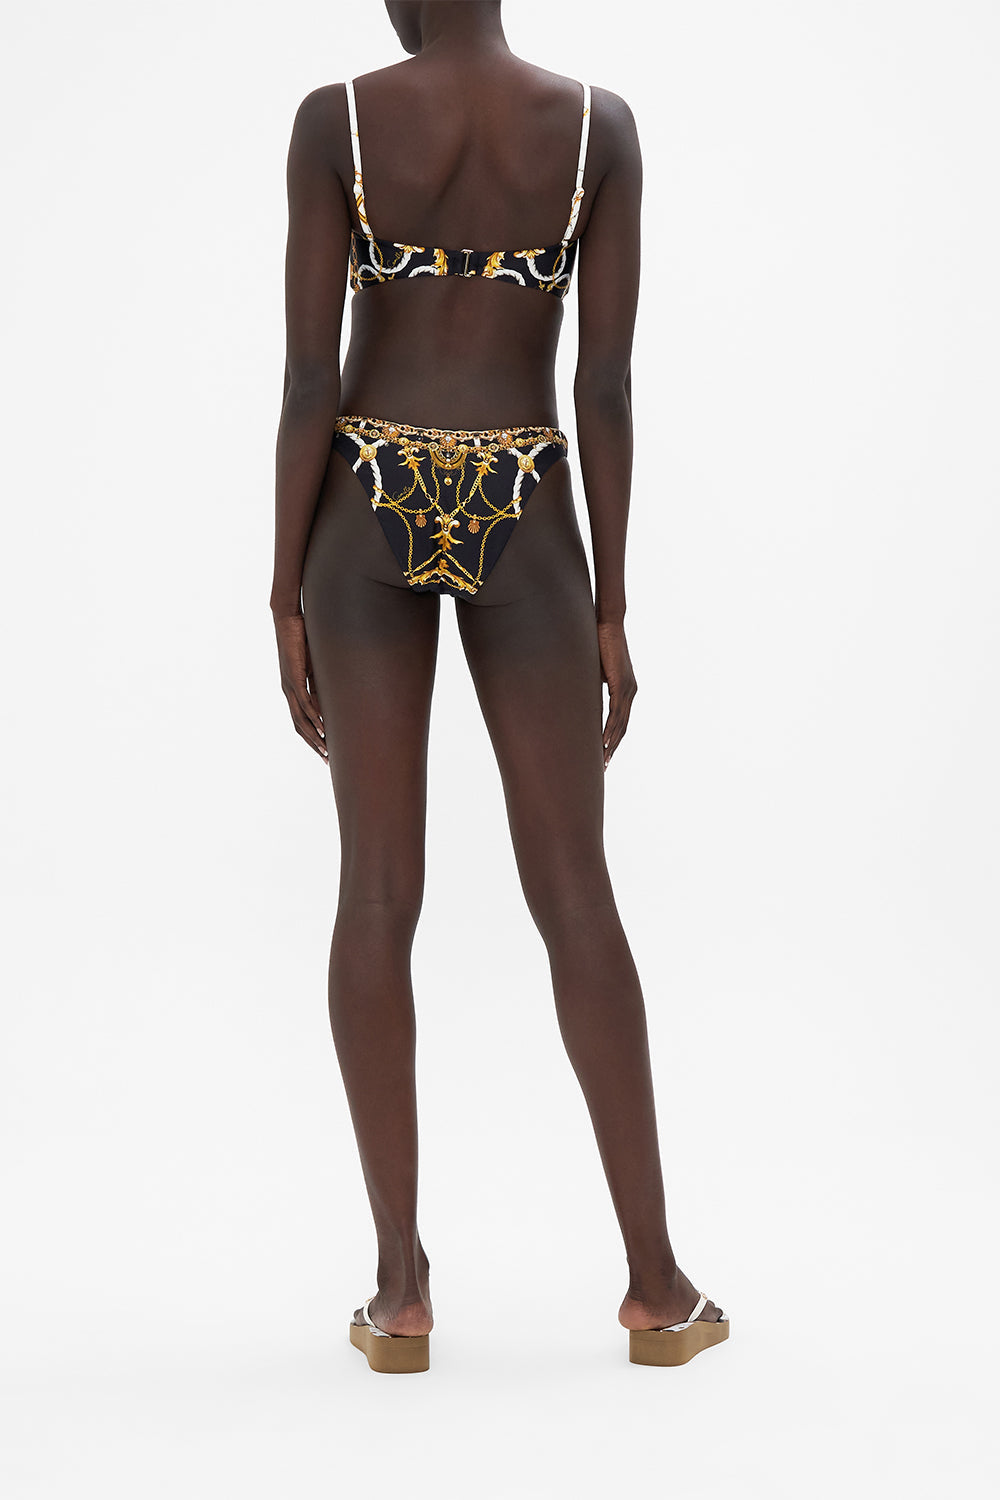 Back view of model wearing CAMILLA balconette underwire bra in Coast to Coast print